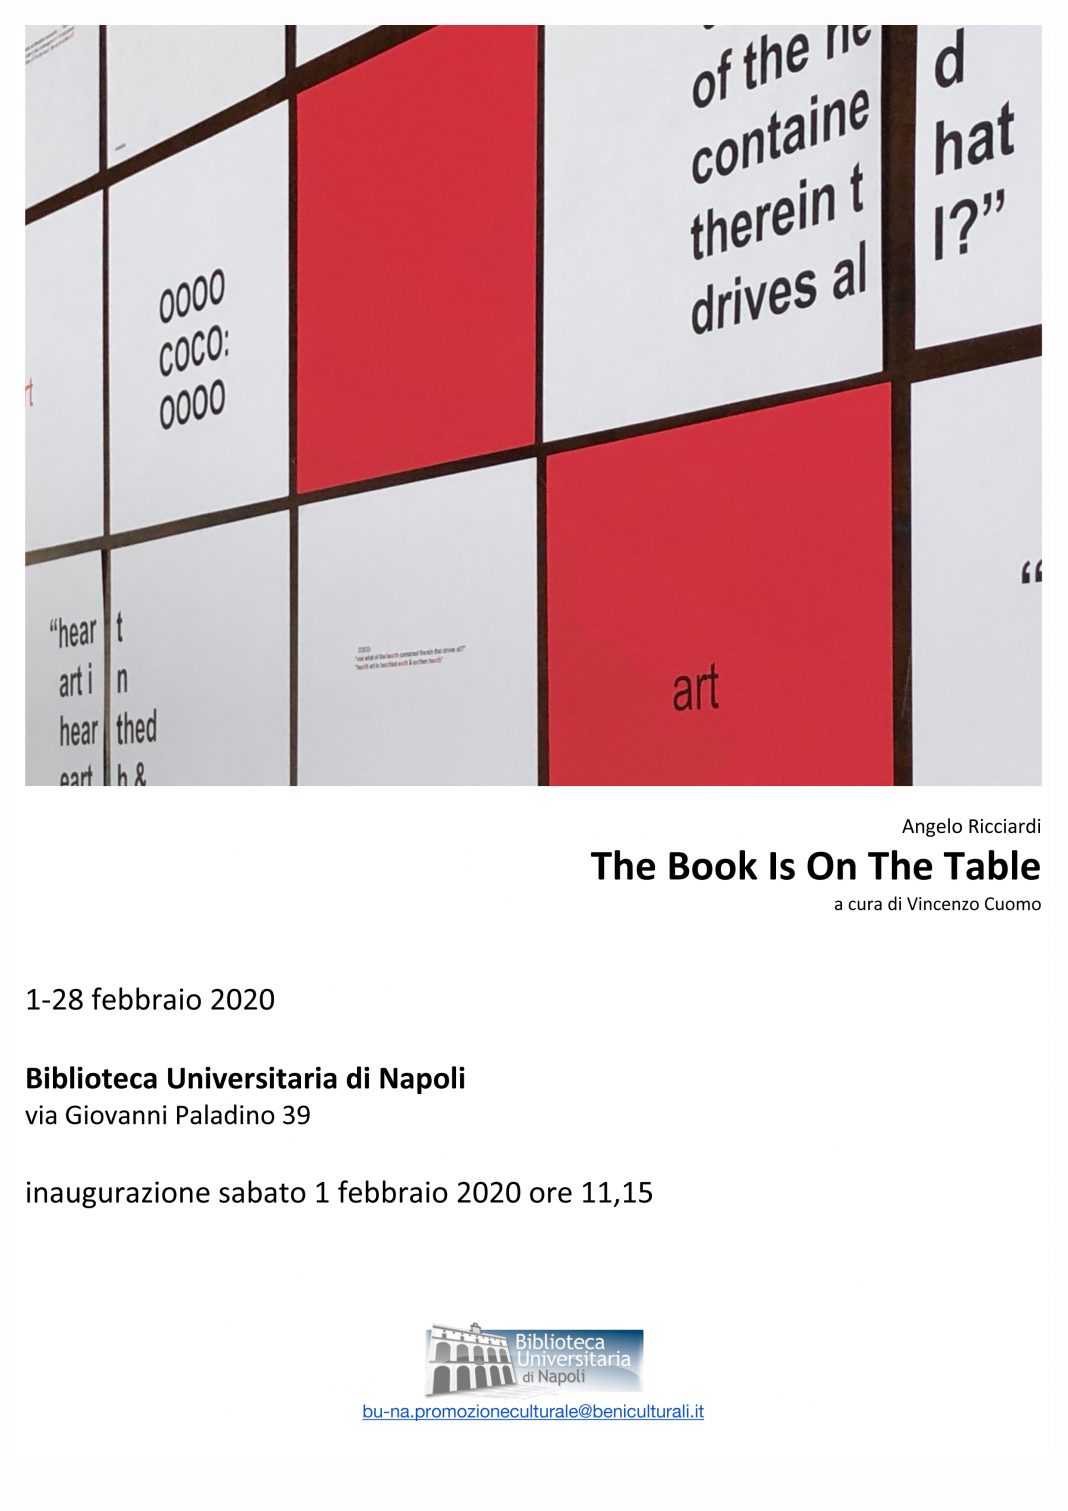 Angelo Ricciardi – The Book Is On The Tablehttps://www.exibart.com/repository/media/formidable/11/Ricciardi-locandina-A4-1068x1511.jpg